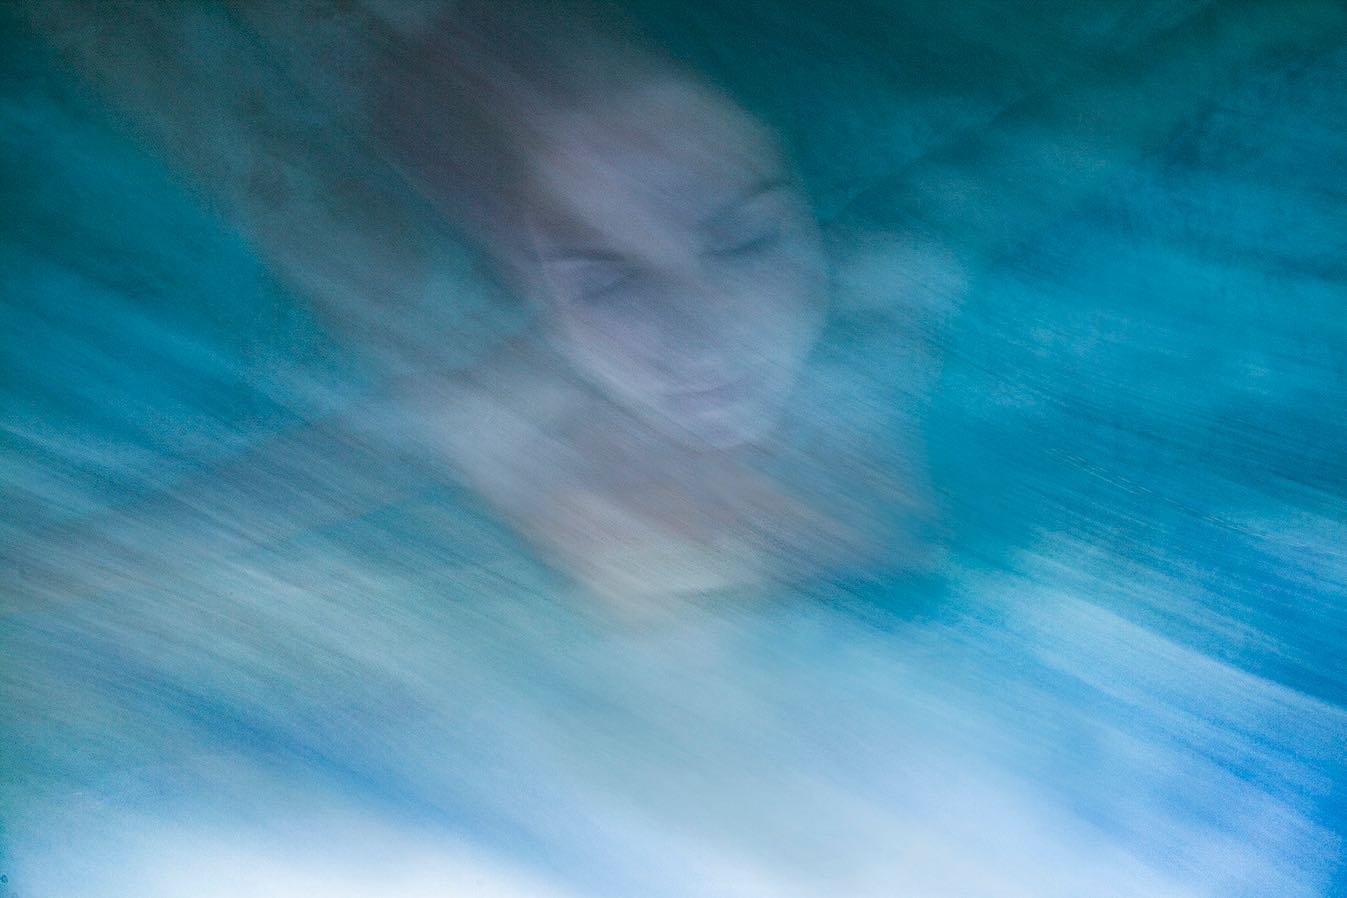 &lsquo;Daydream&rsquo;

Photographed Bronte ocean pool, double plate exposure.

#originalartwork
#fineartphotography
#fineart
#photography
#artforsale
#photographer
#sydneyphotography
#exploresydney
#blackandwhitephotography
#art 
#artlovers
#austral